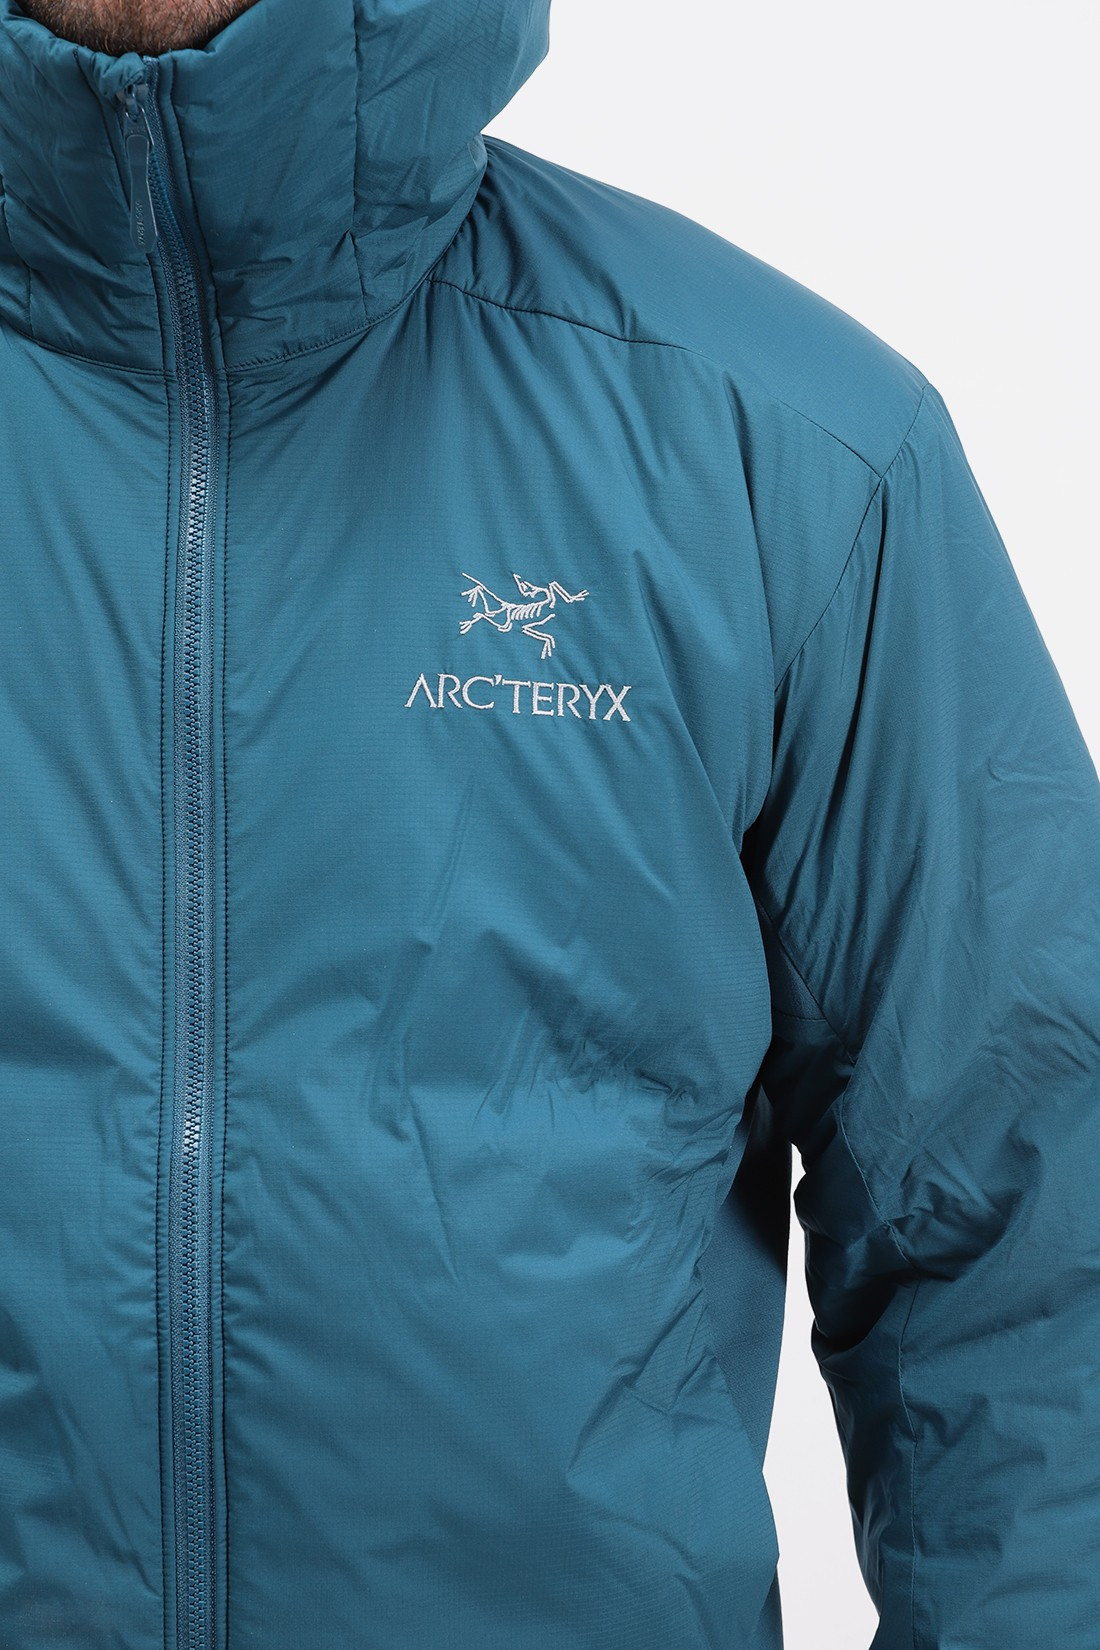 ARC'TERYX / Atom lt hoody mens jacket Timelapse